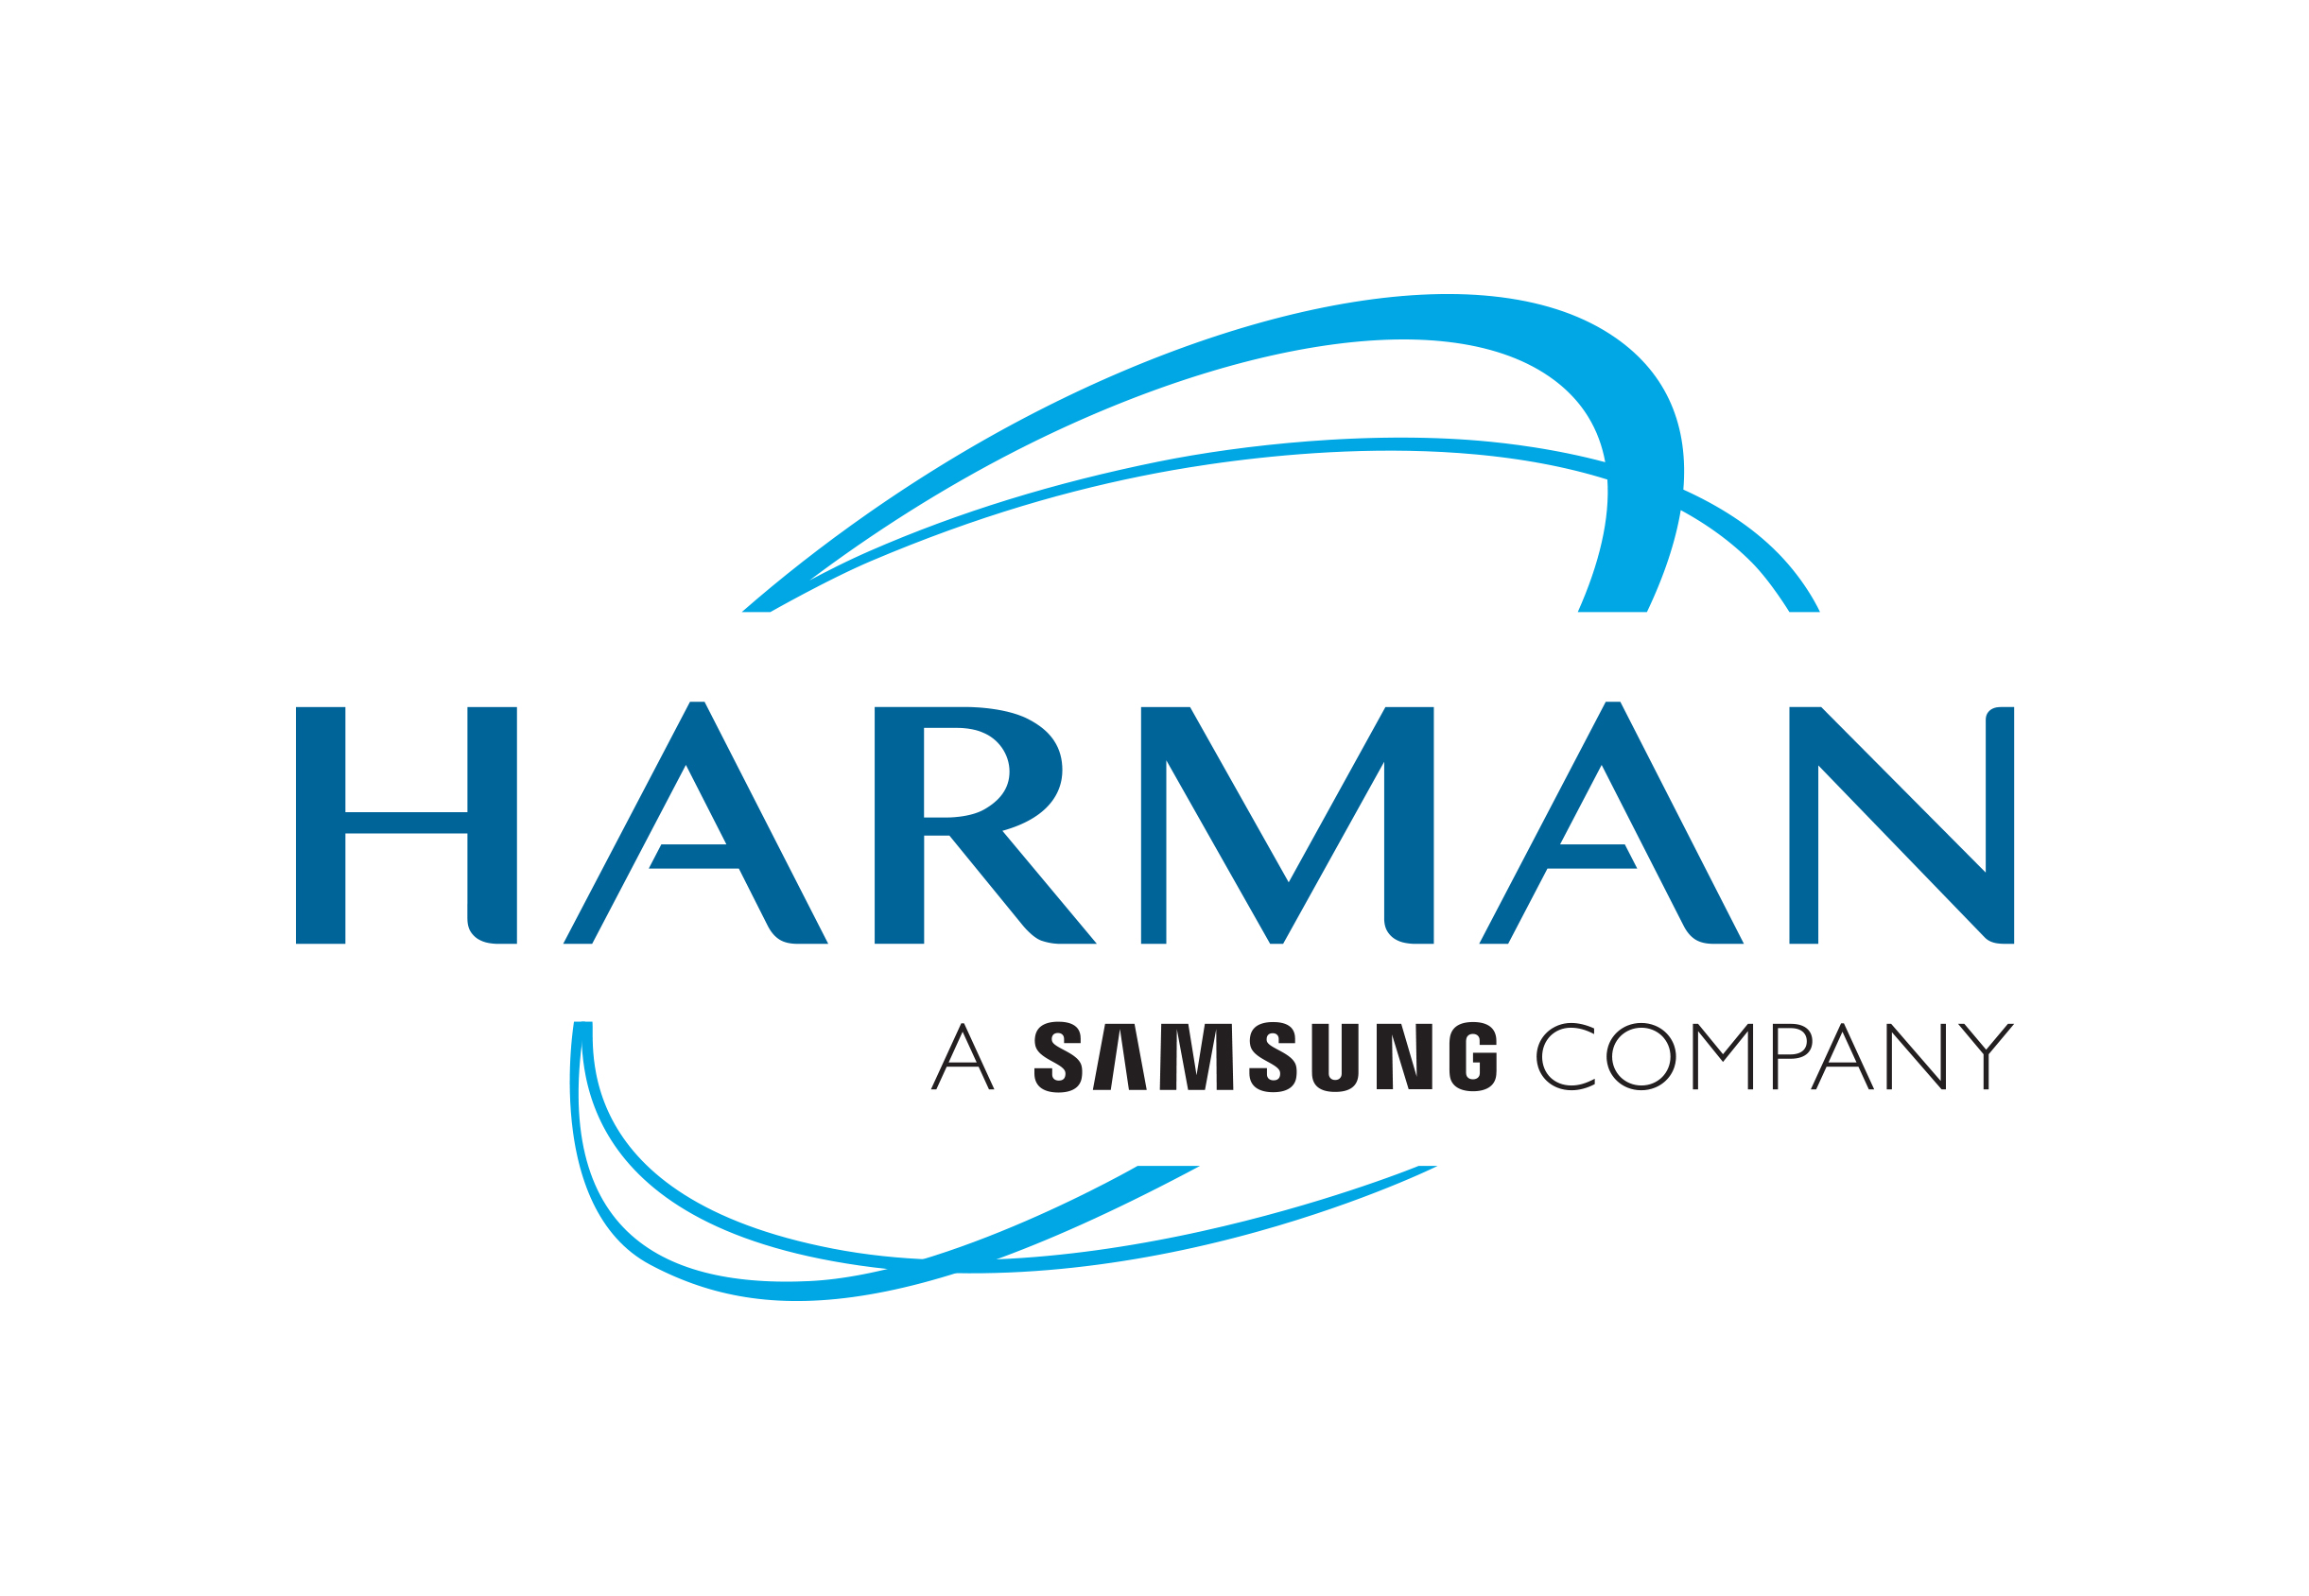 Harman Primary Corporate Logo CMYK.jpg